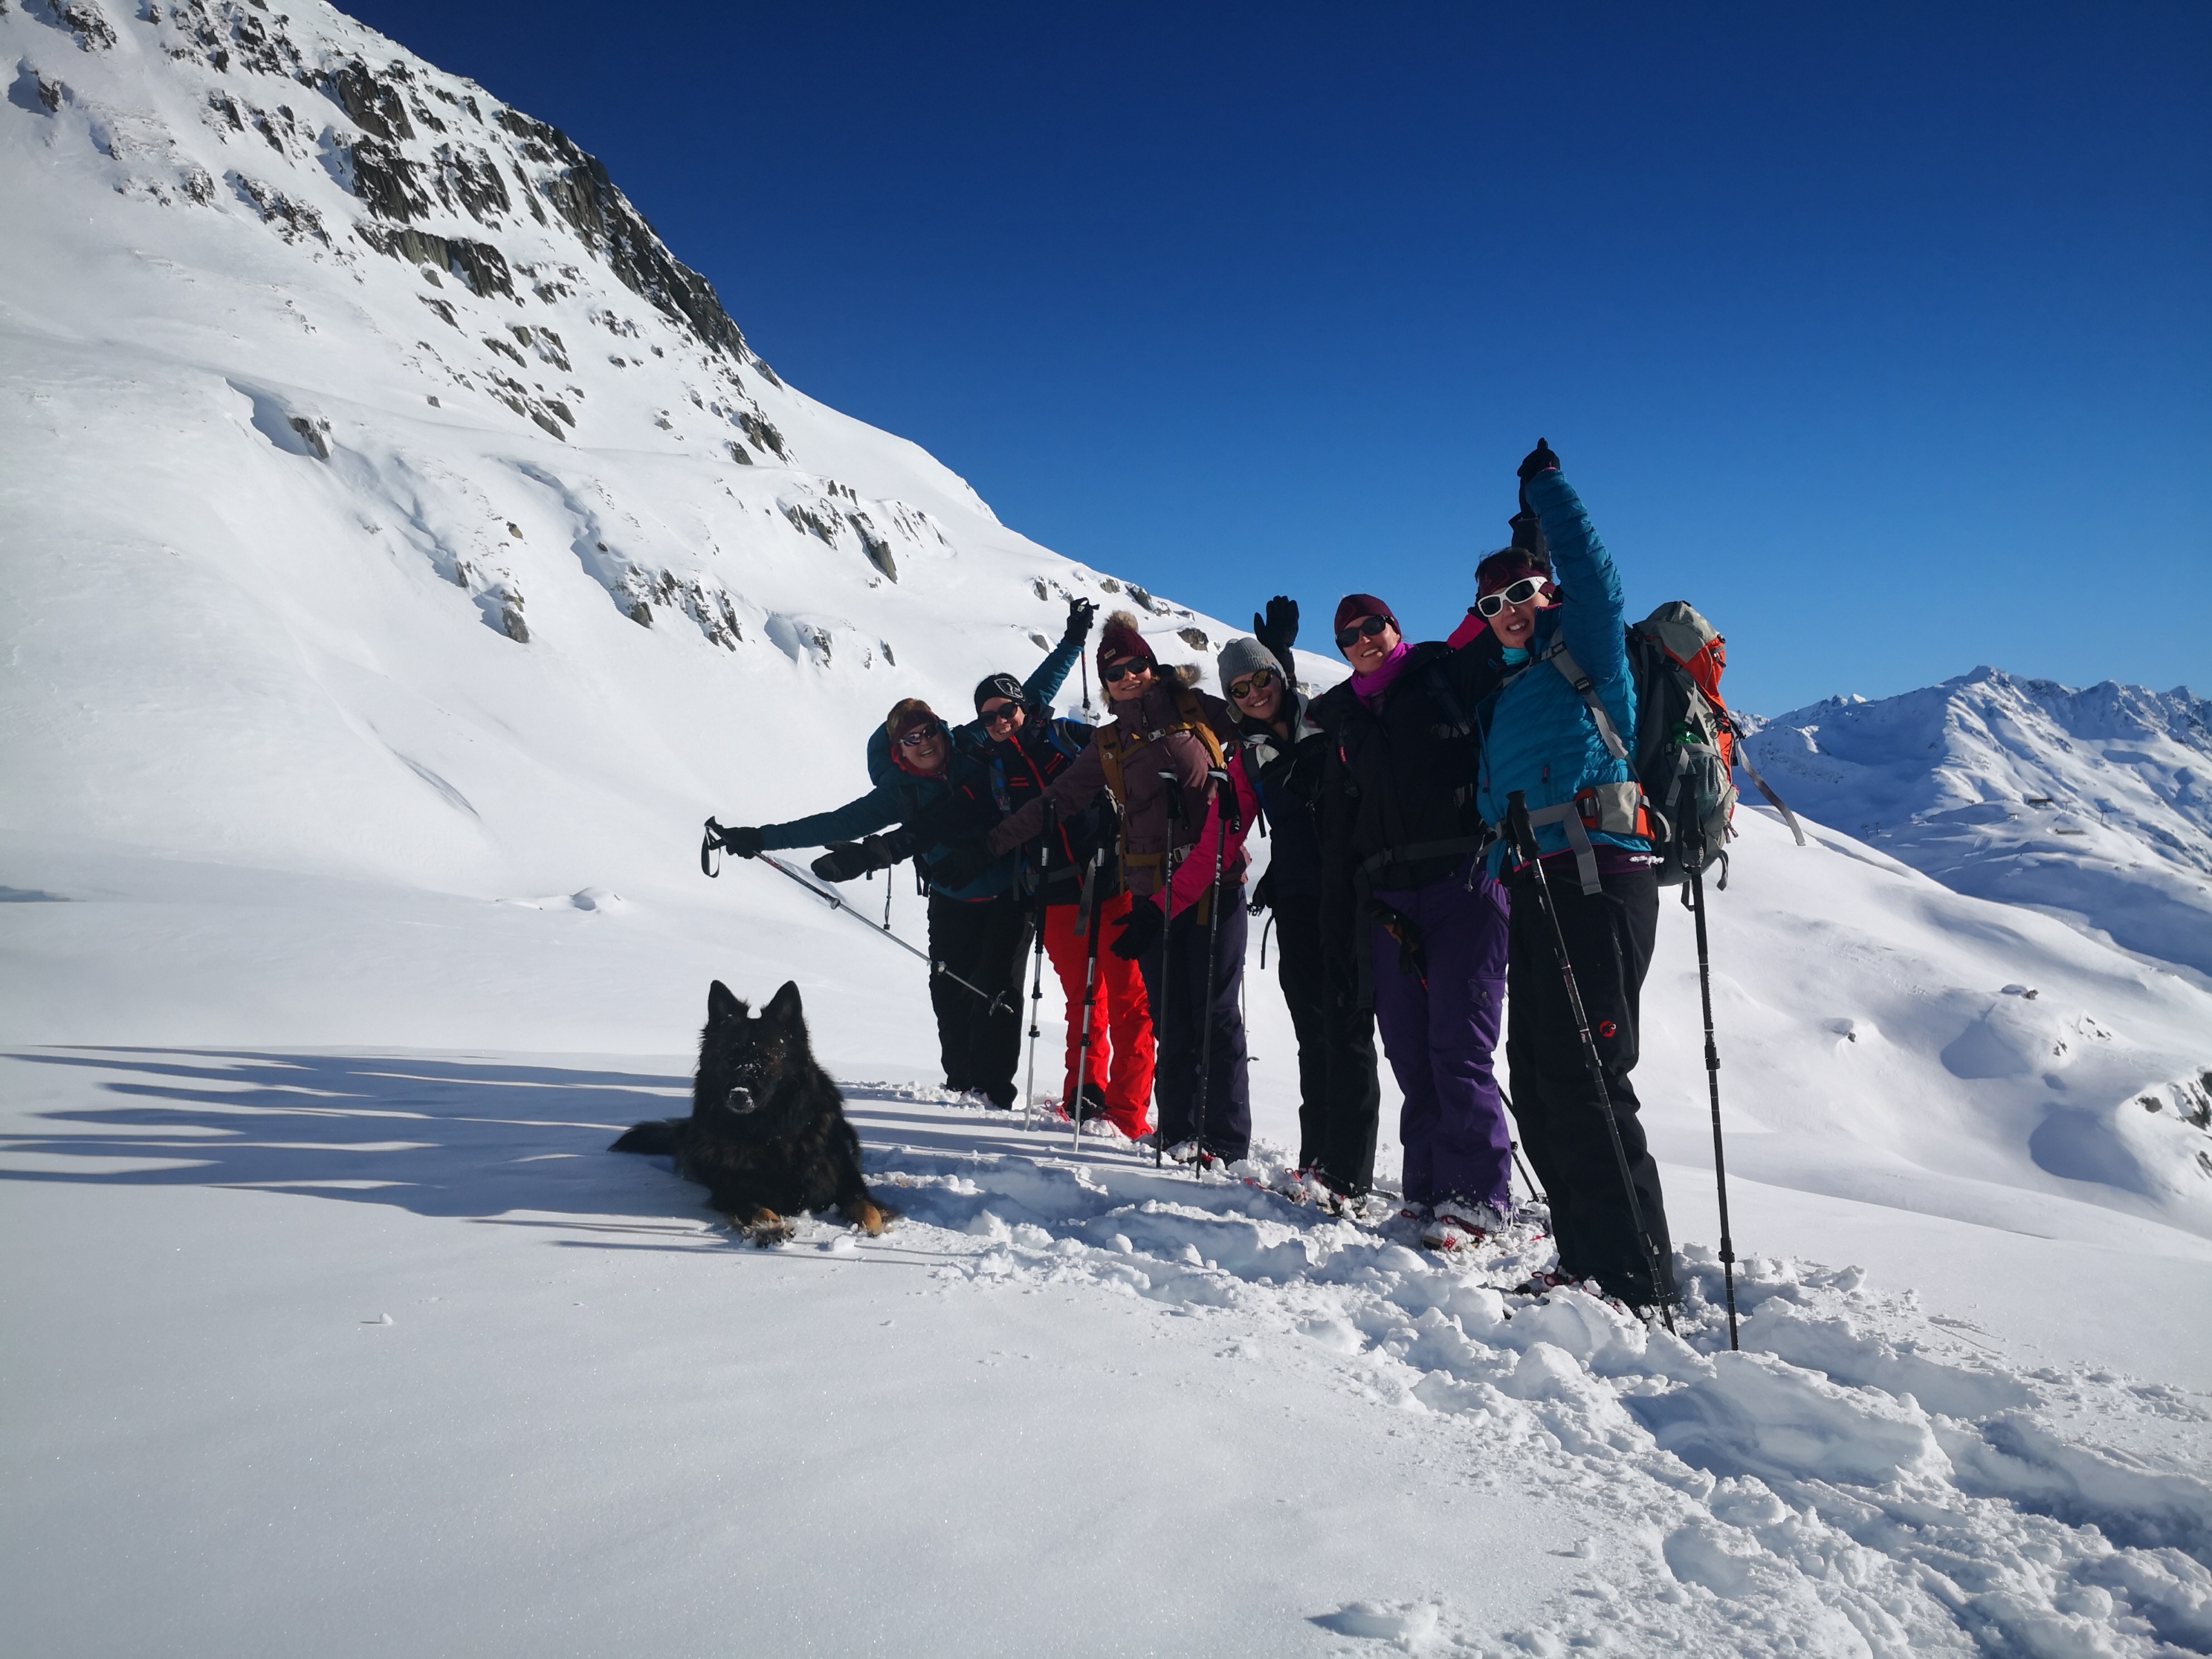  Schneeschuhtour mit Hund Berner Oberland